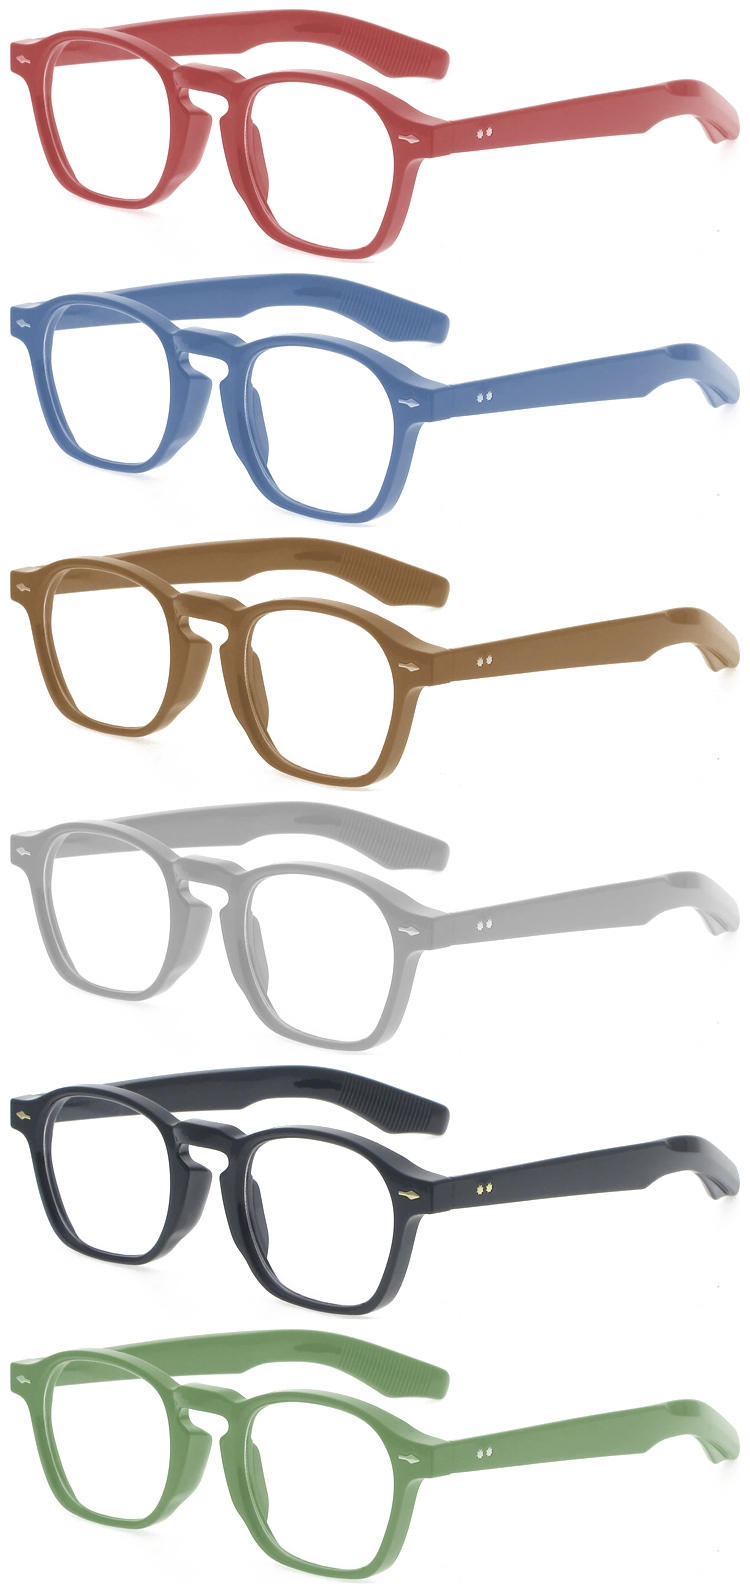 Dachuan Optical DRP102208 China Wholesale Retro Unisex Reading Glasses with Non-slip Design (2)